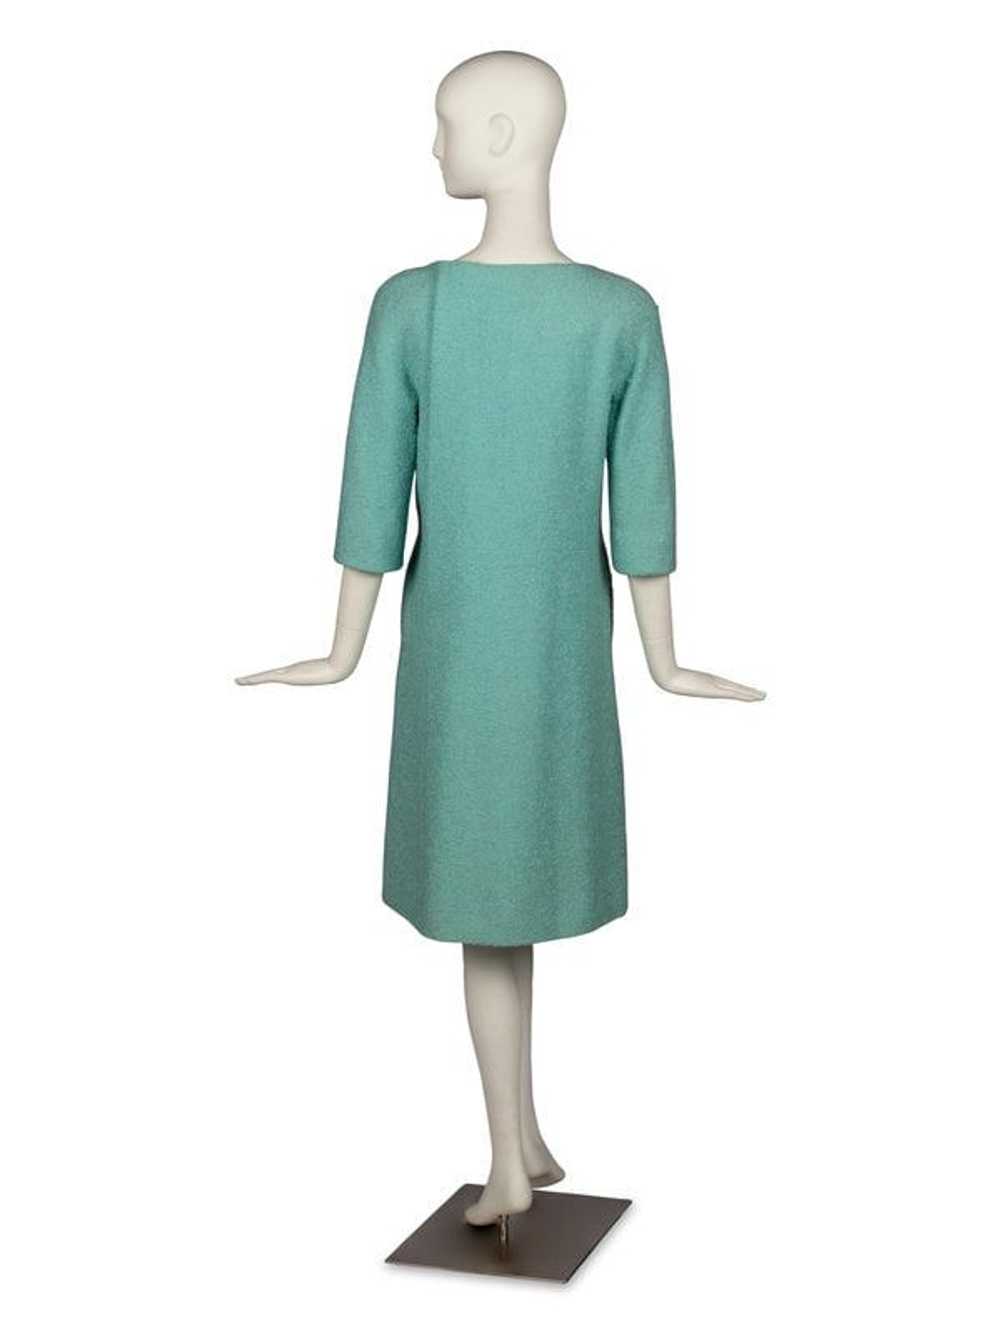 Balenciaga Haute Couture Dress,1960s - image 3